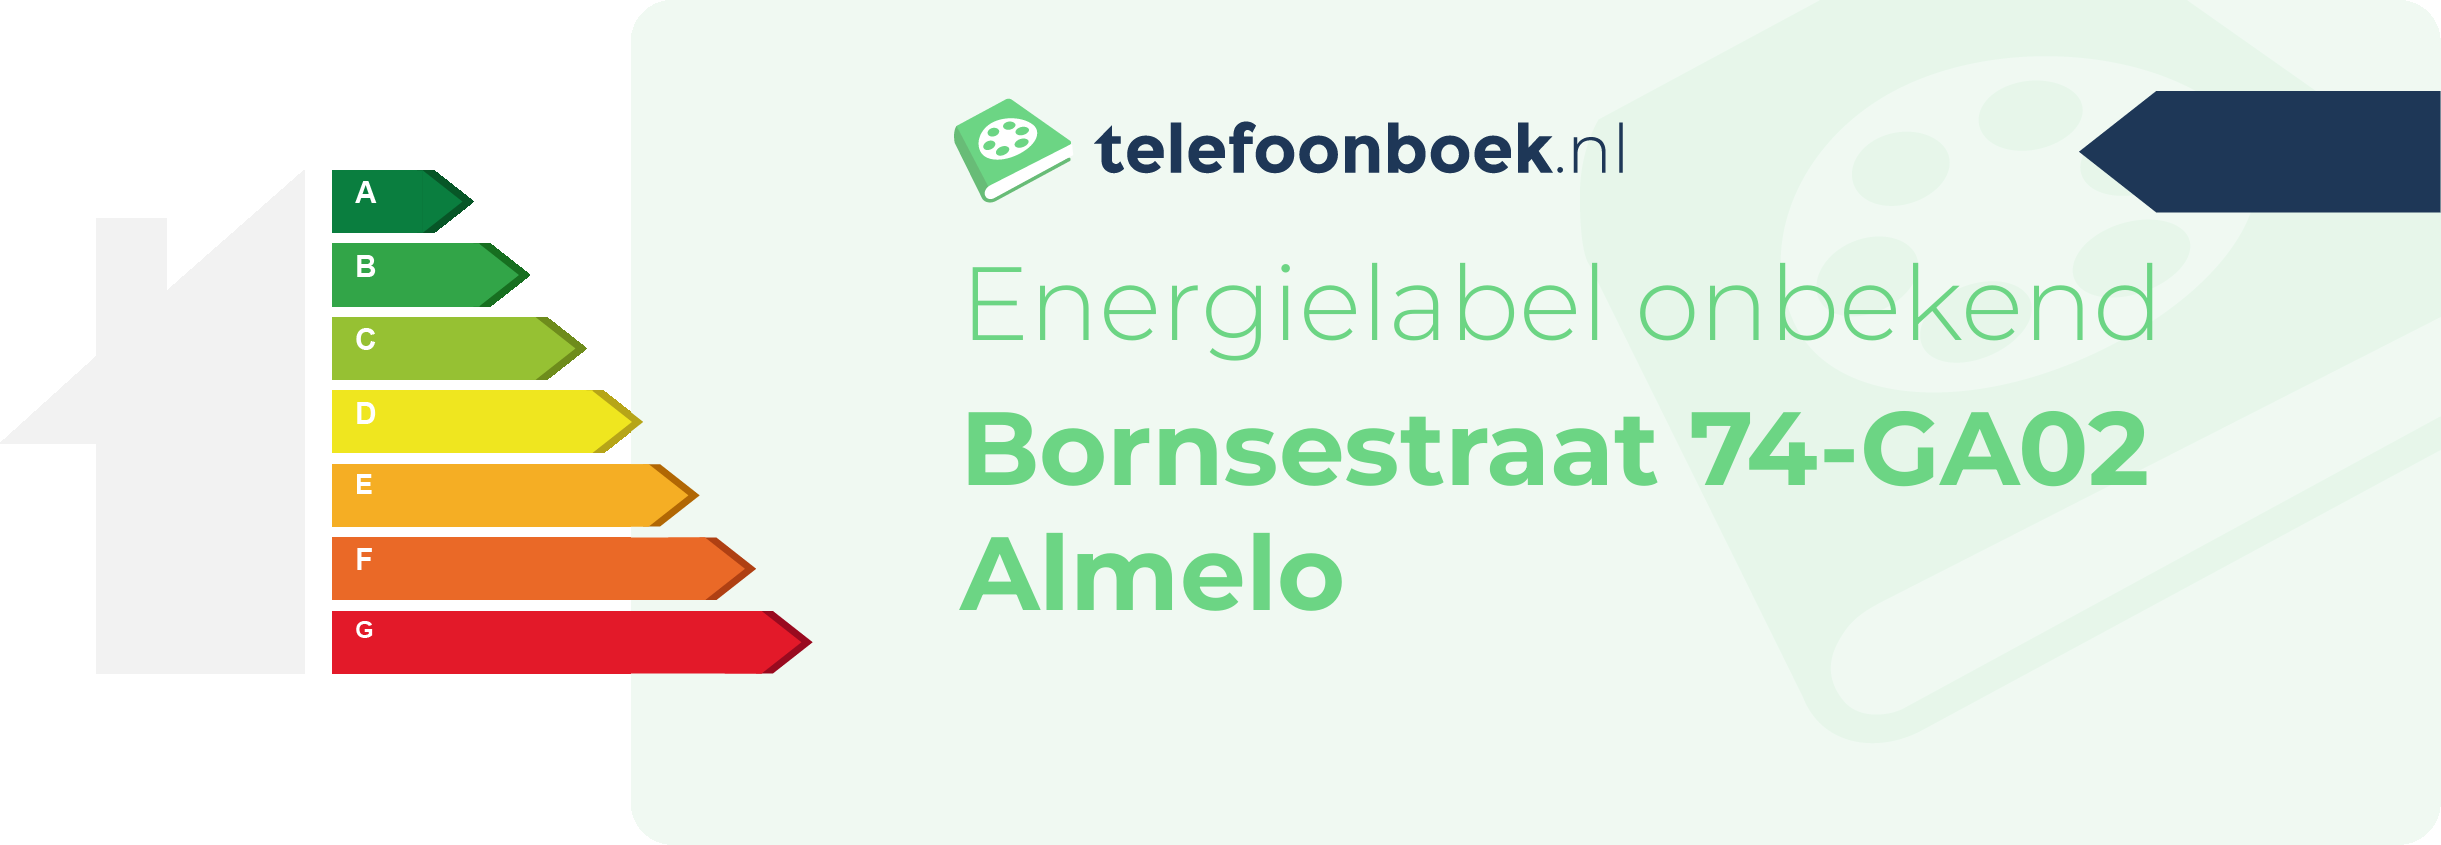 Energielabel Bornsestraat 74-GA02 Almelo